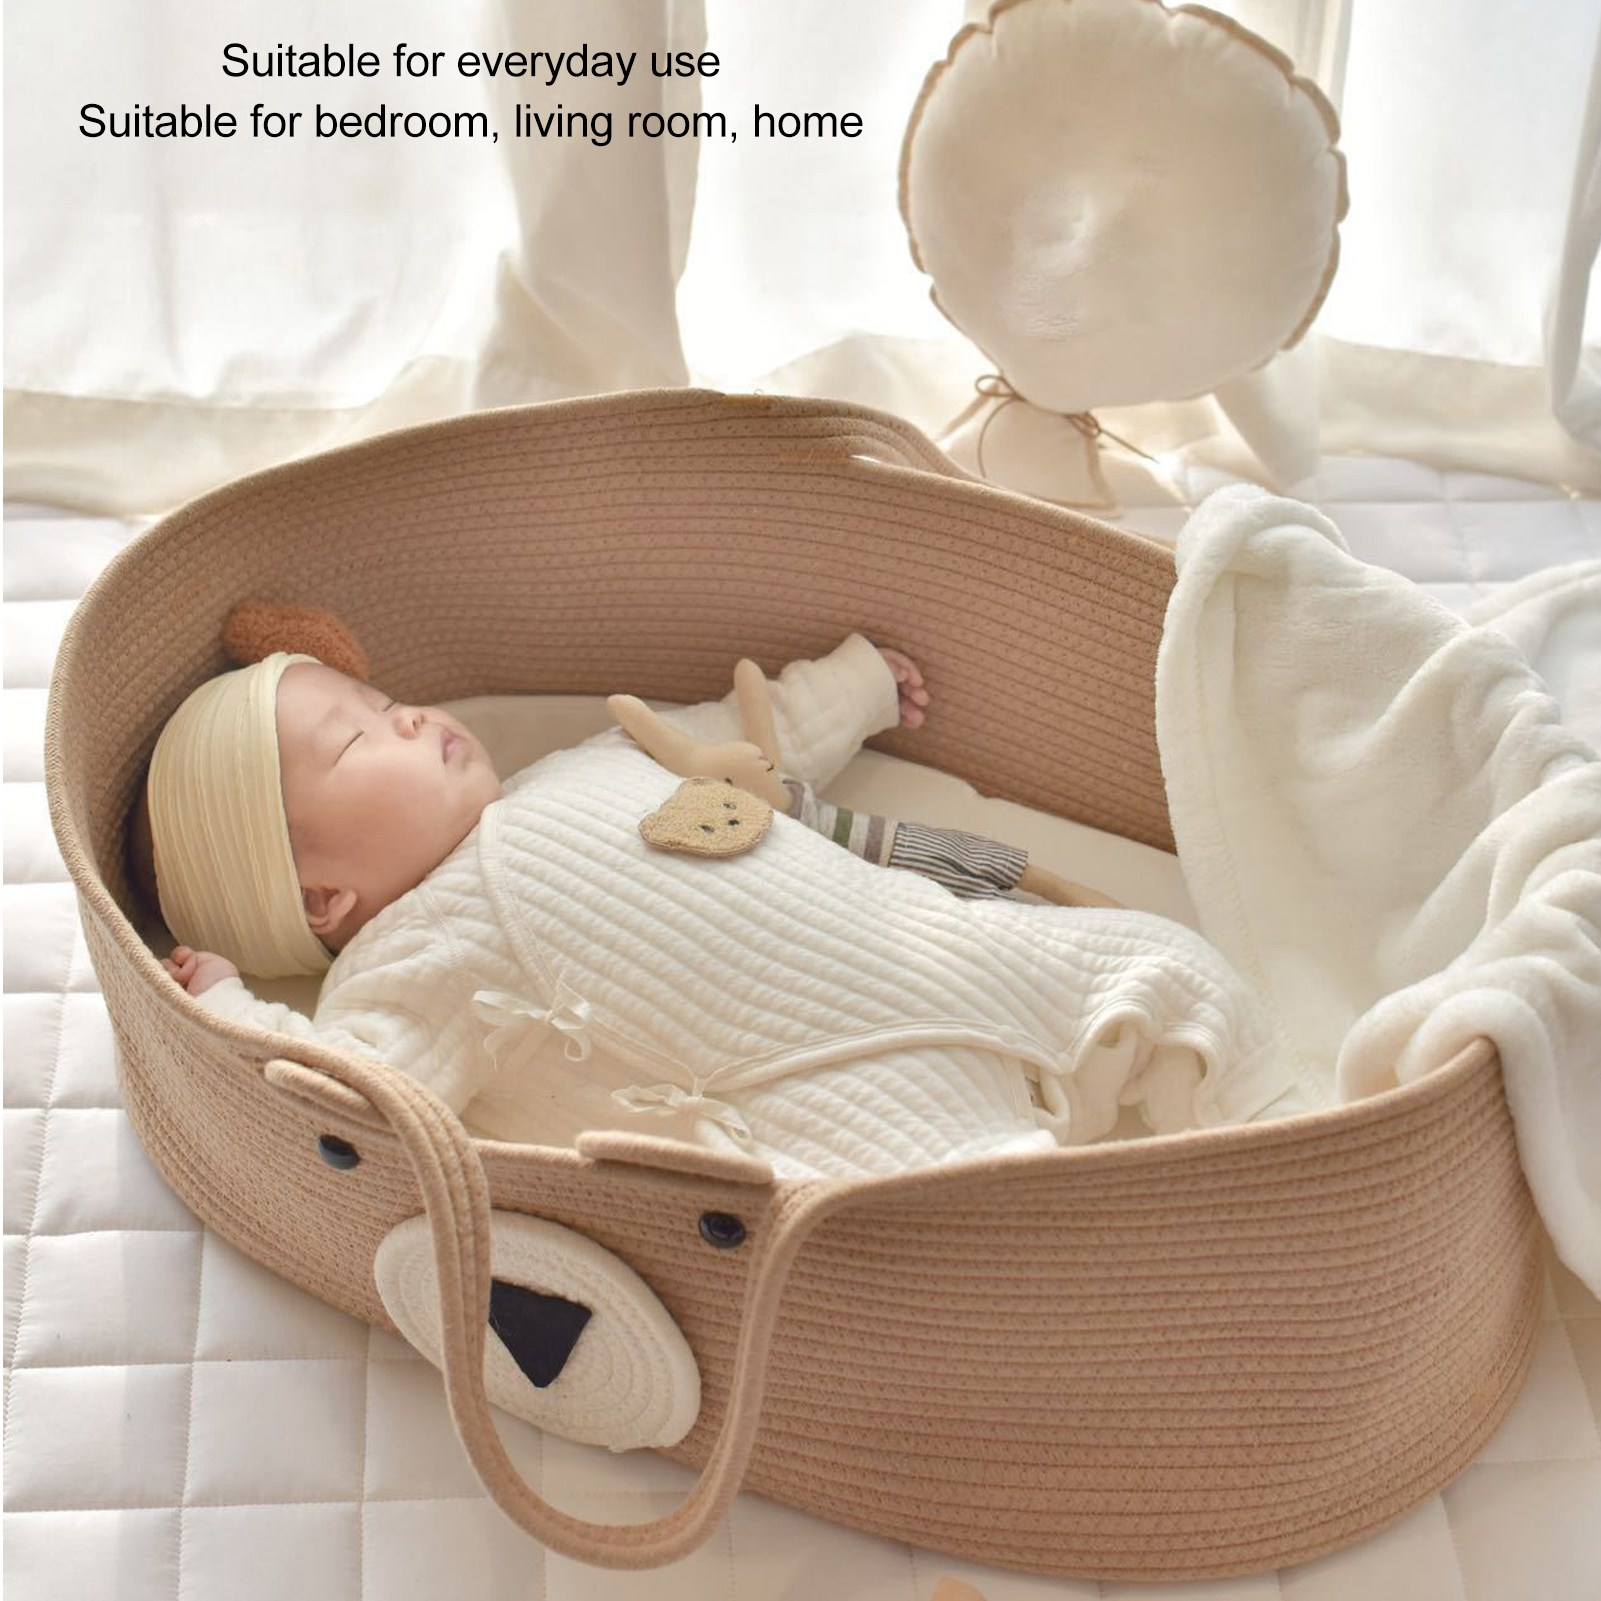 Newkits Baby Sleeping Basket Cute Cartoon Bear Pattern Storage Wove Cotton